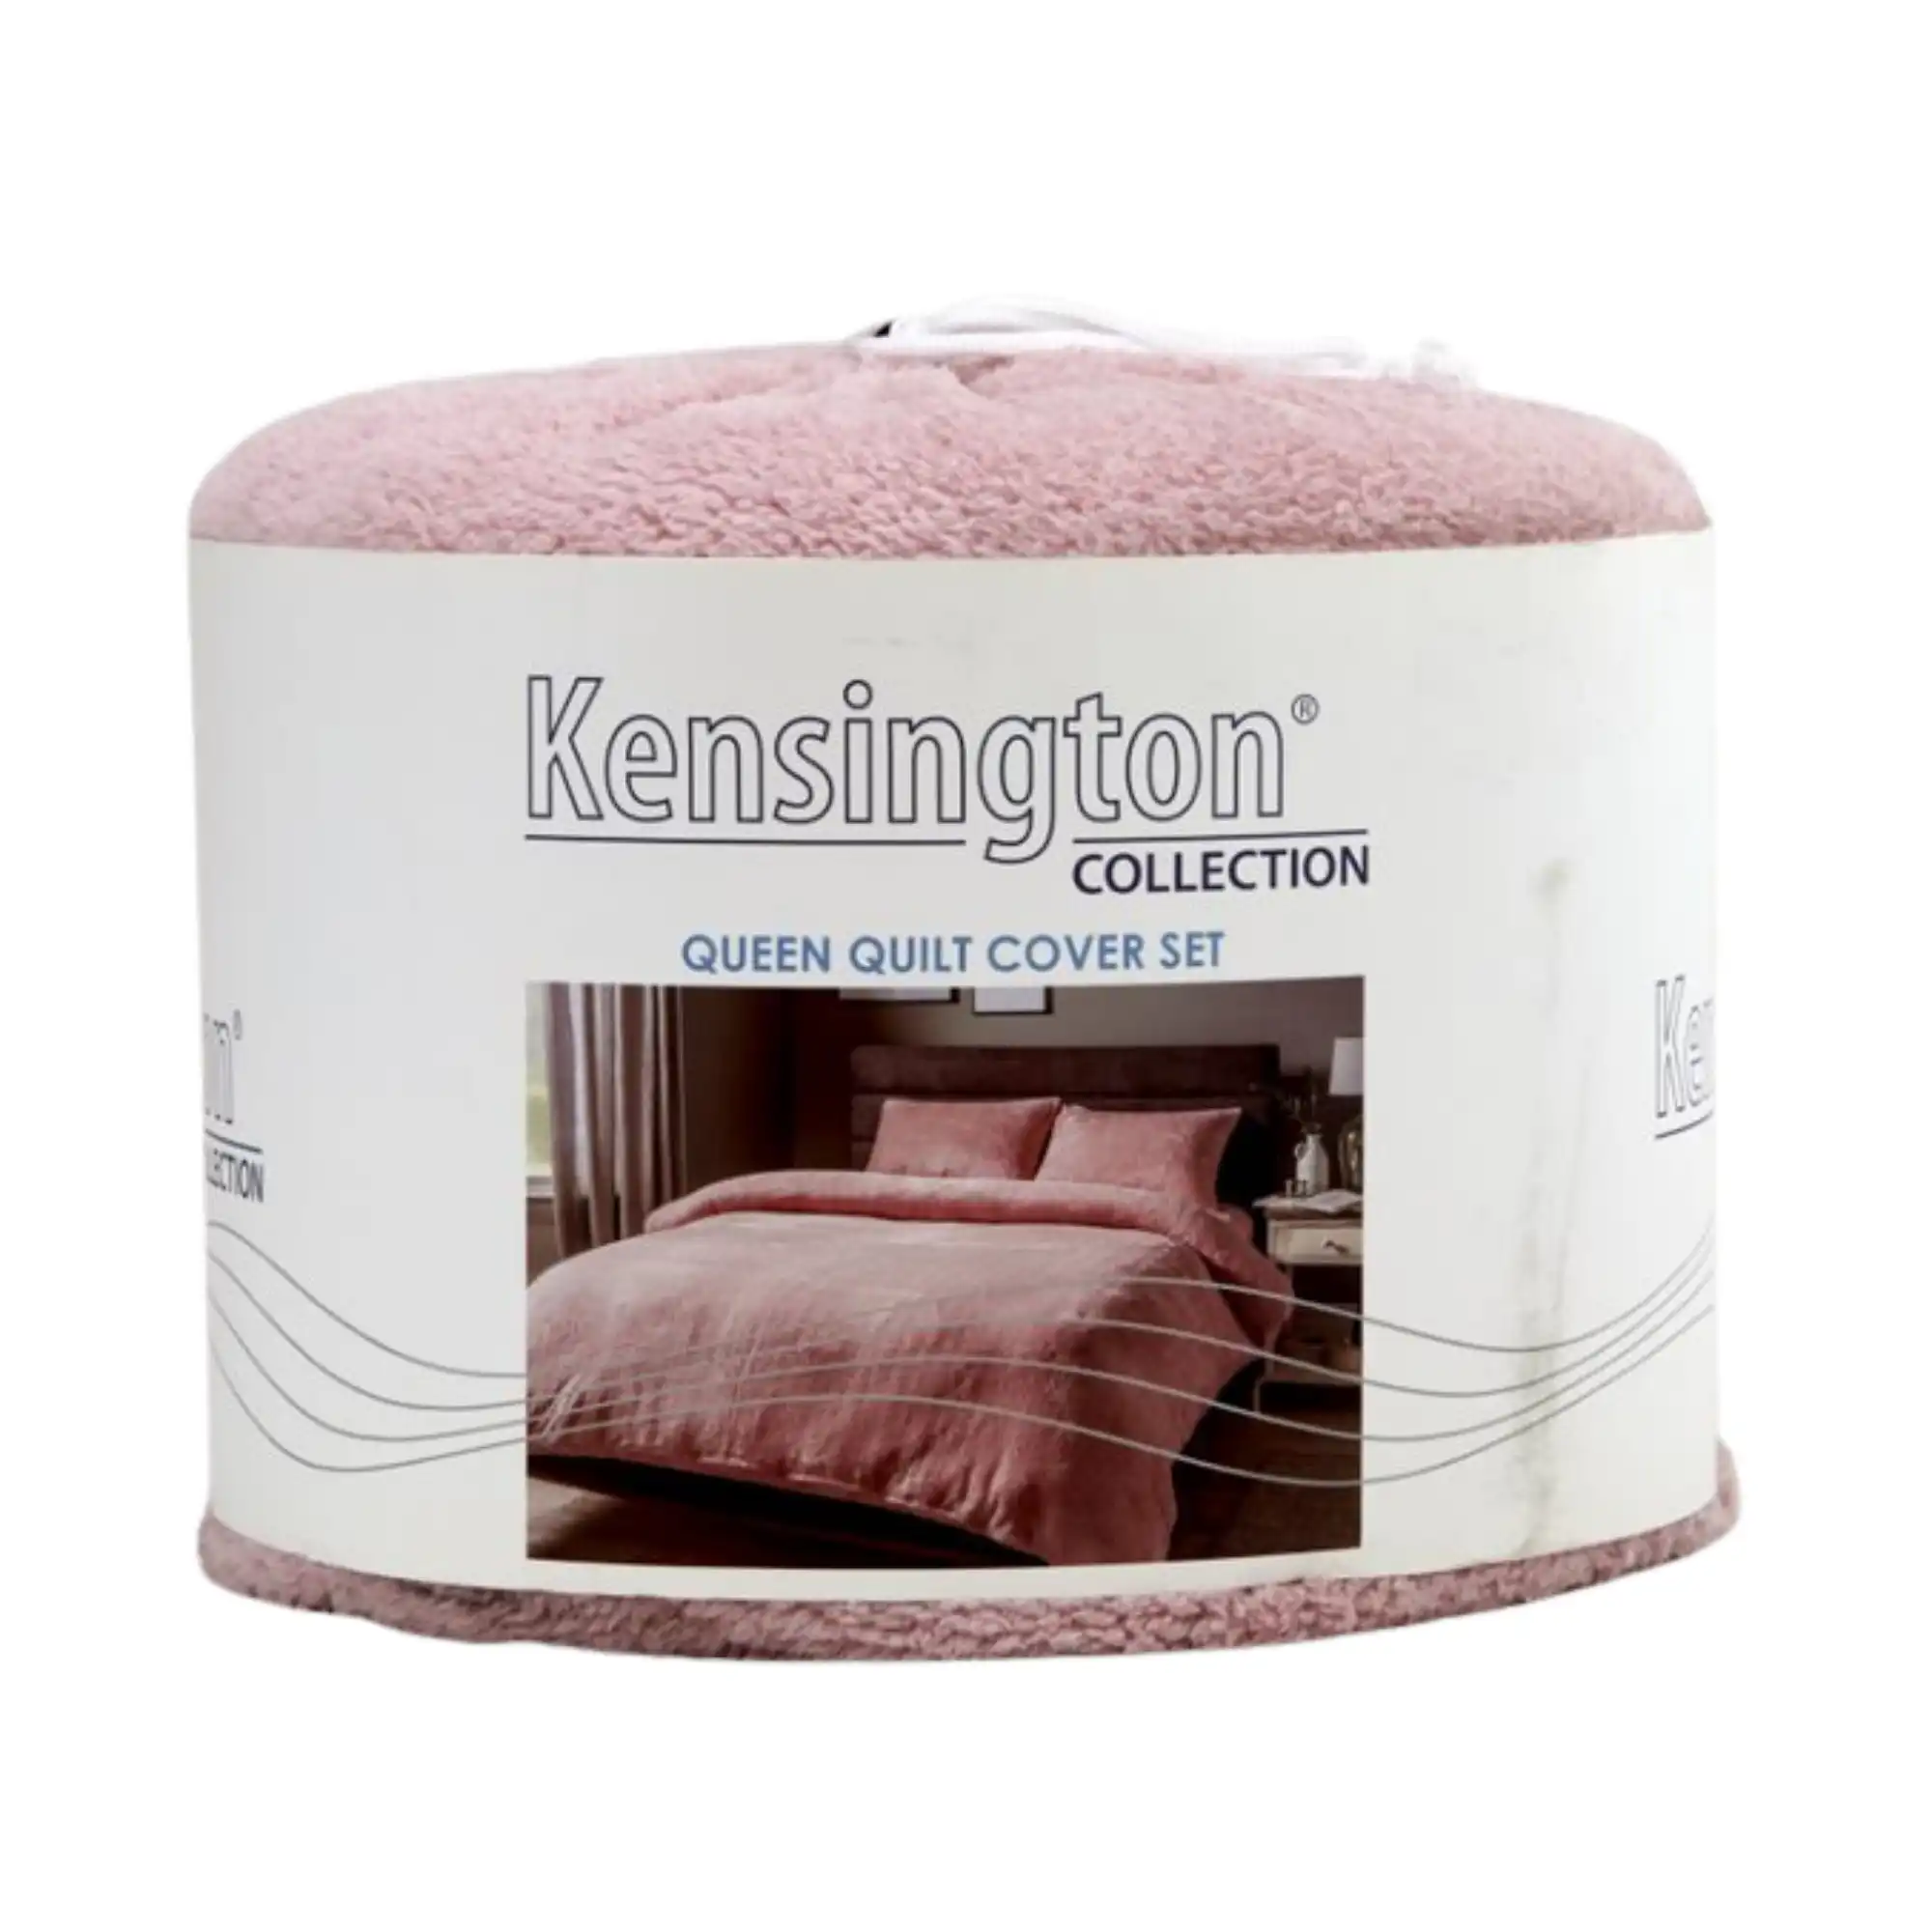 Kensington Collection Teddy Fleece Quilt Cover Set, Rose